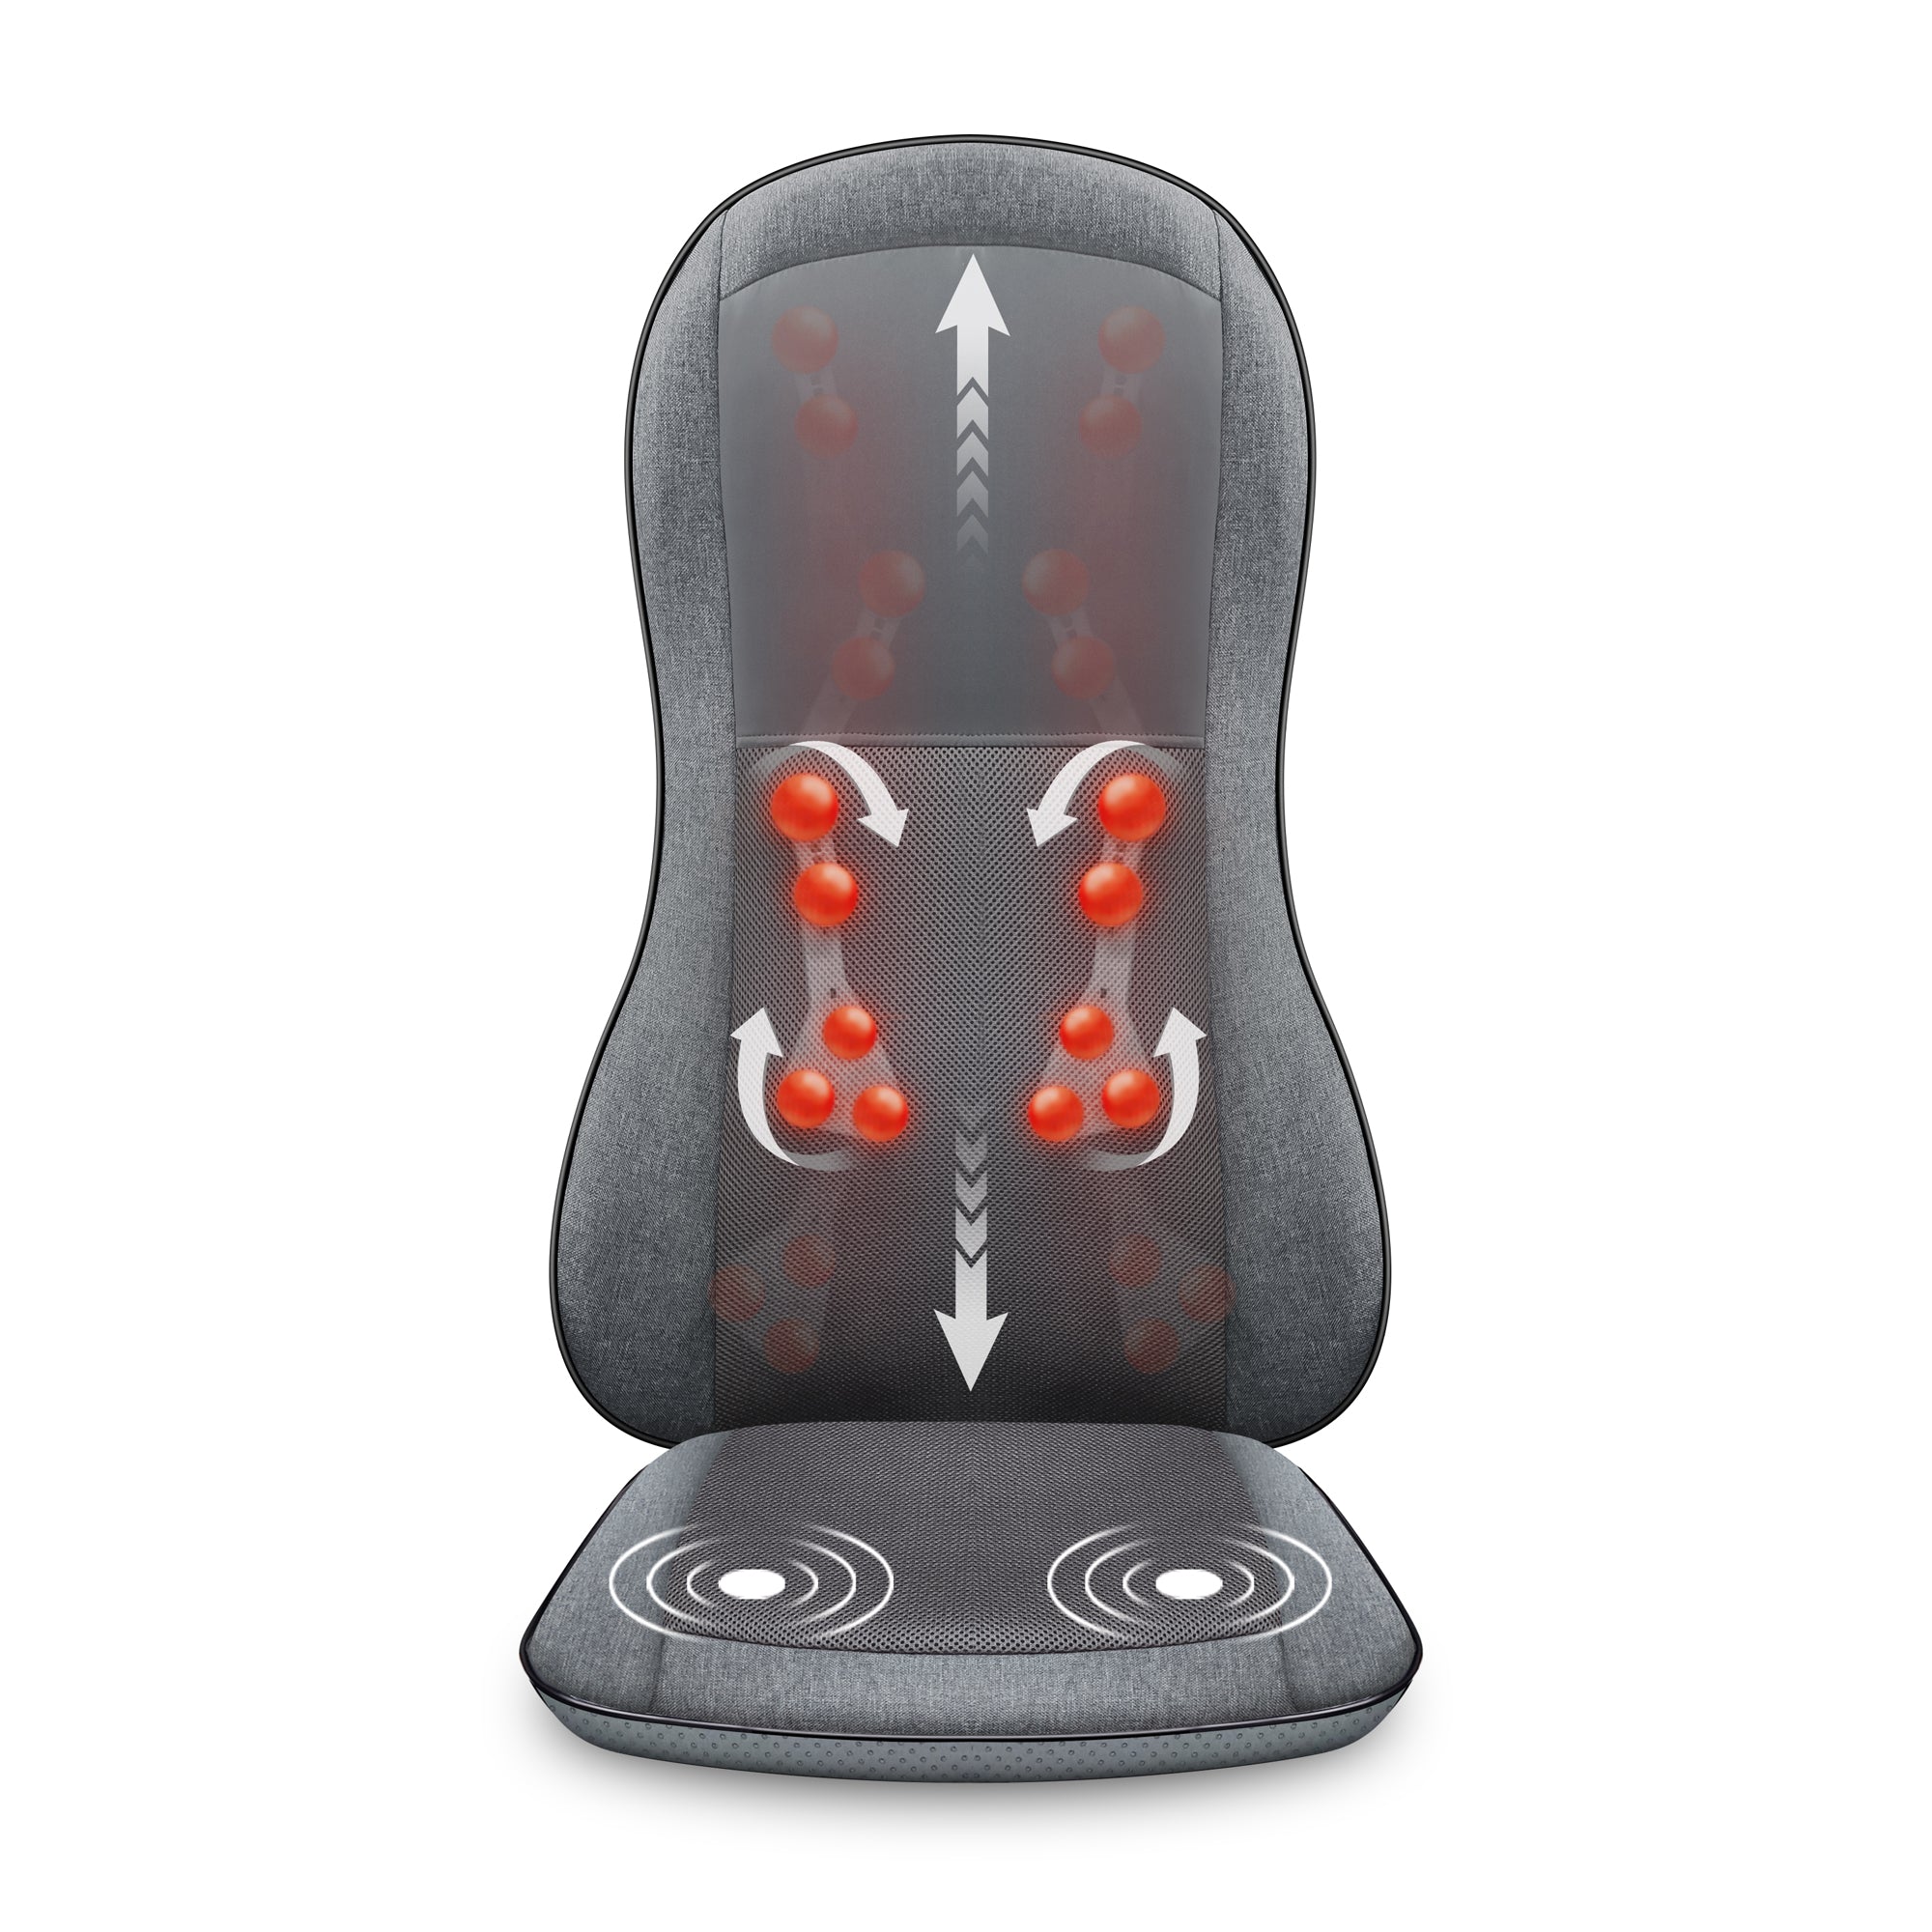 Comfier 2D/3D Shiatsu Full Back Massage Seat Cushion with Heat - 2913